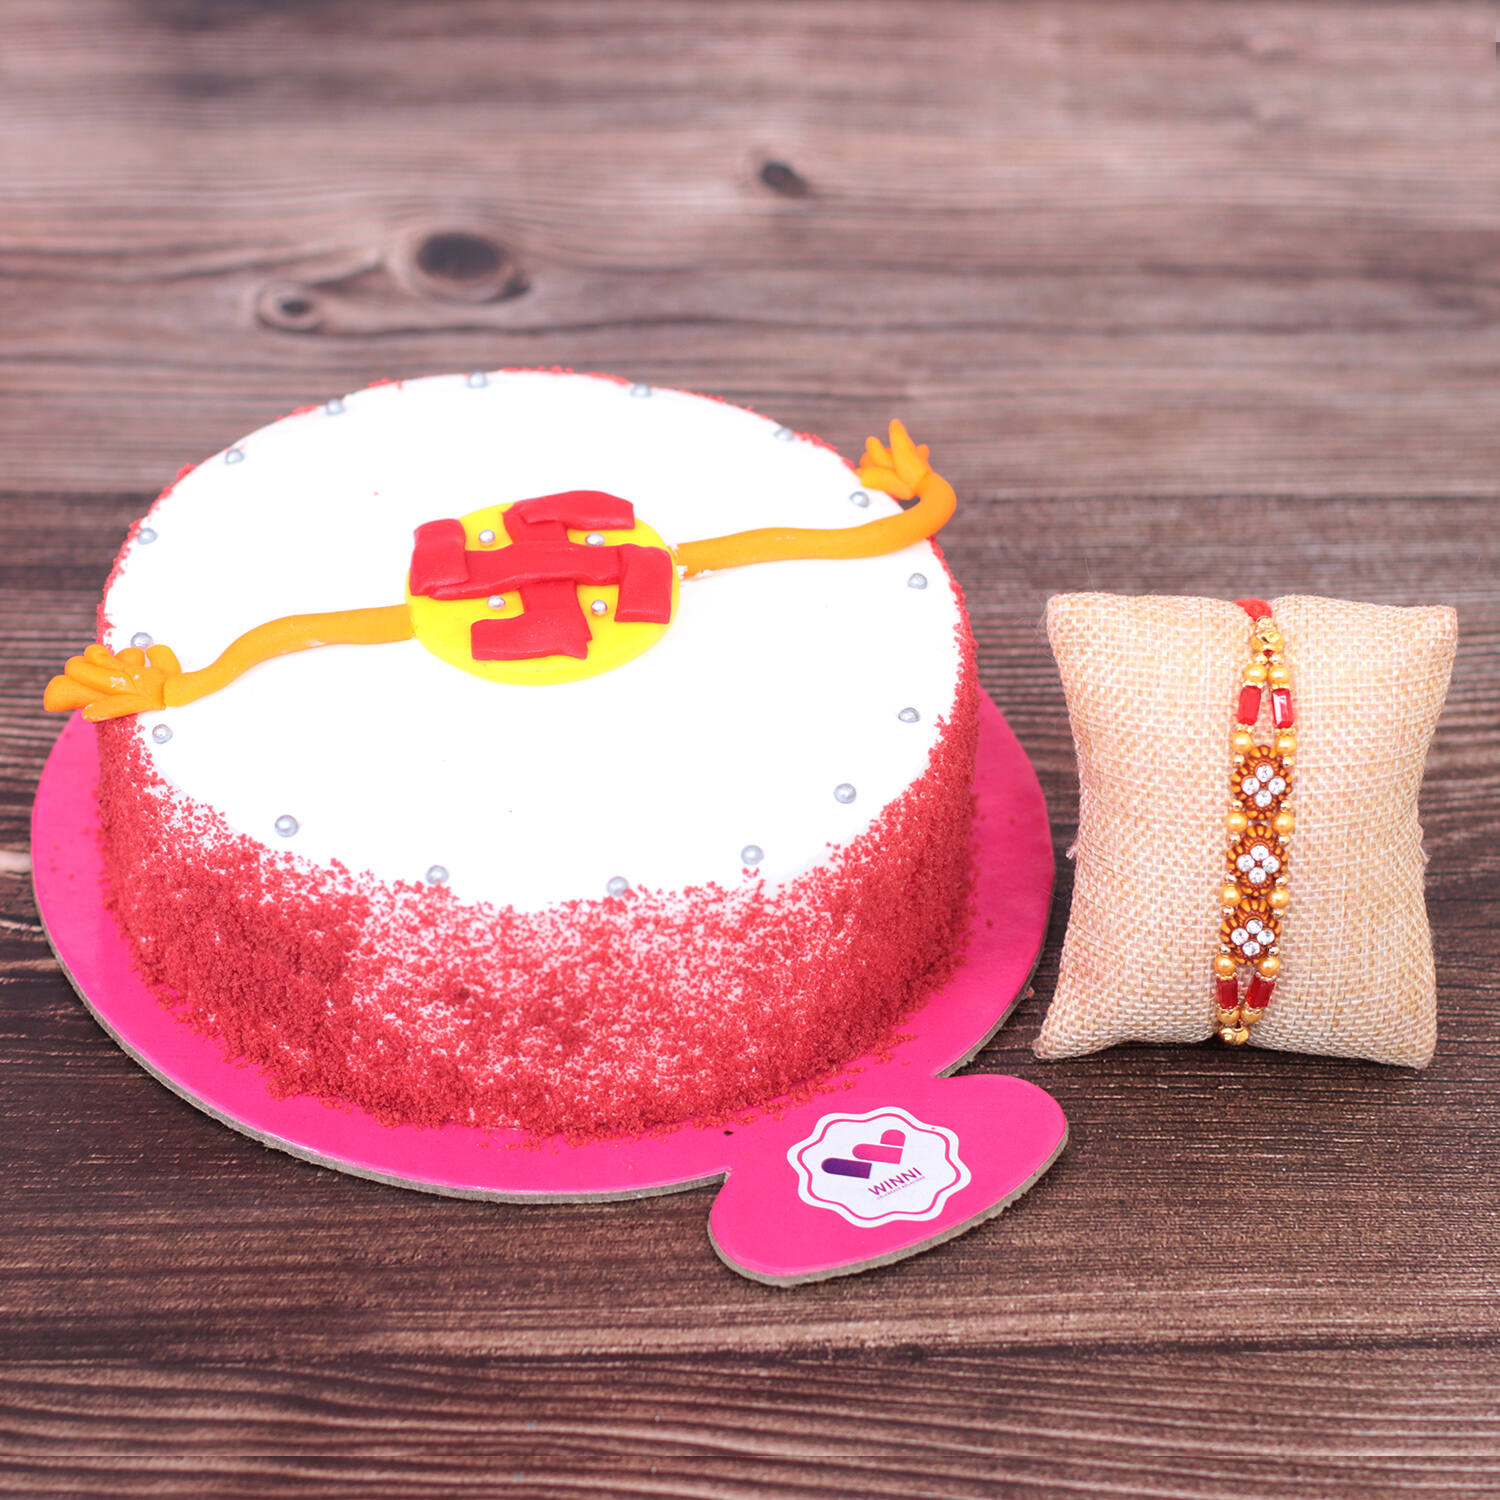 Creative Cake Ideas That Add Charm To Birthday Celebrations